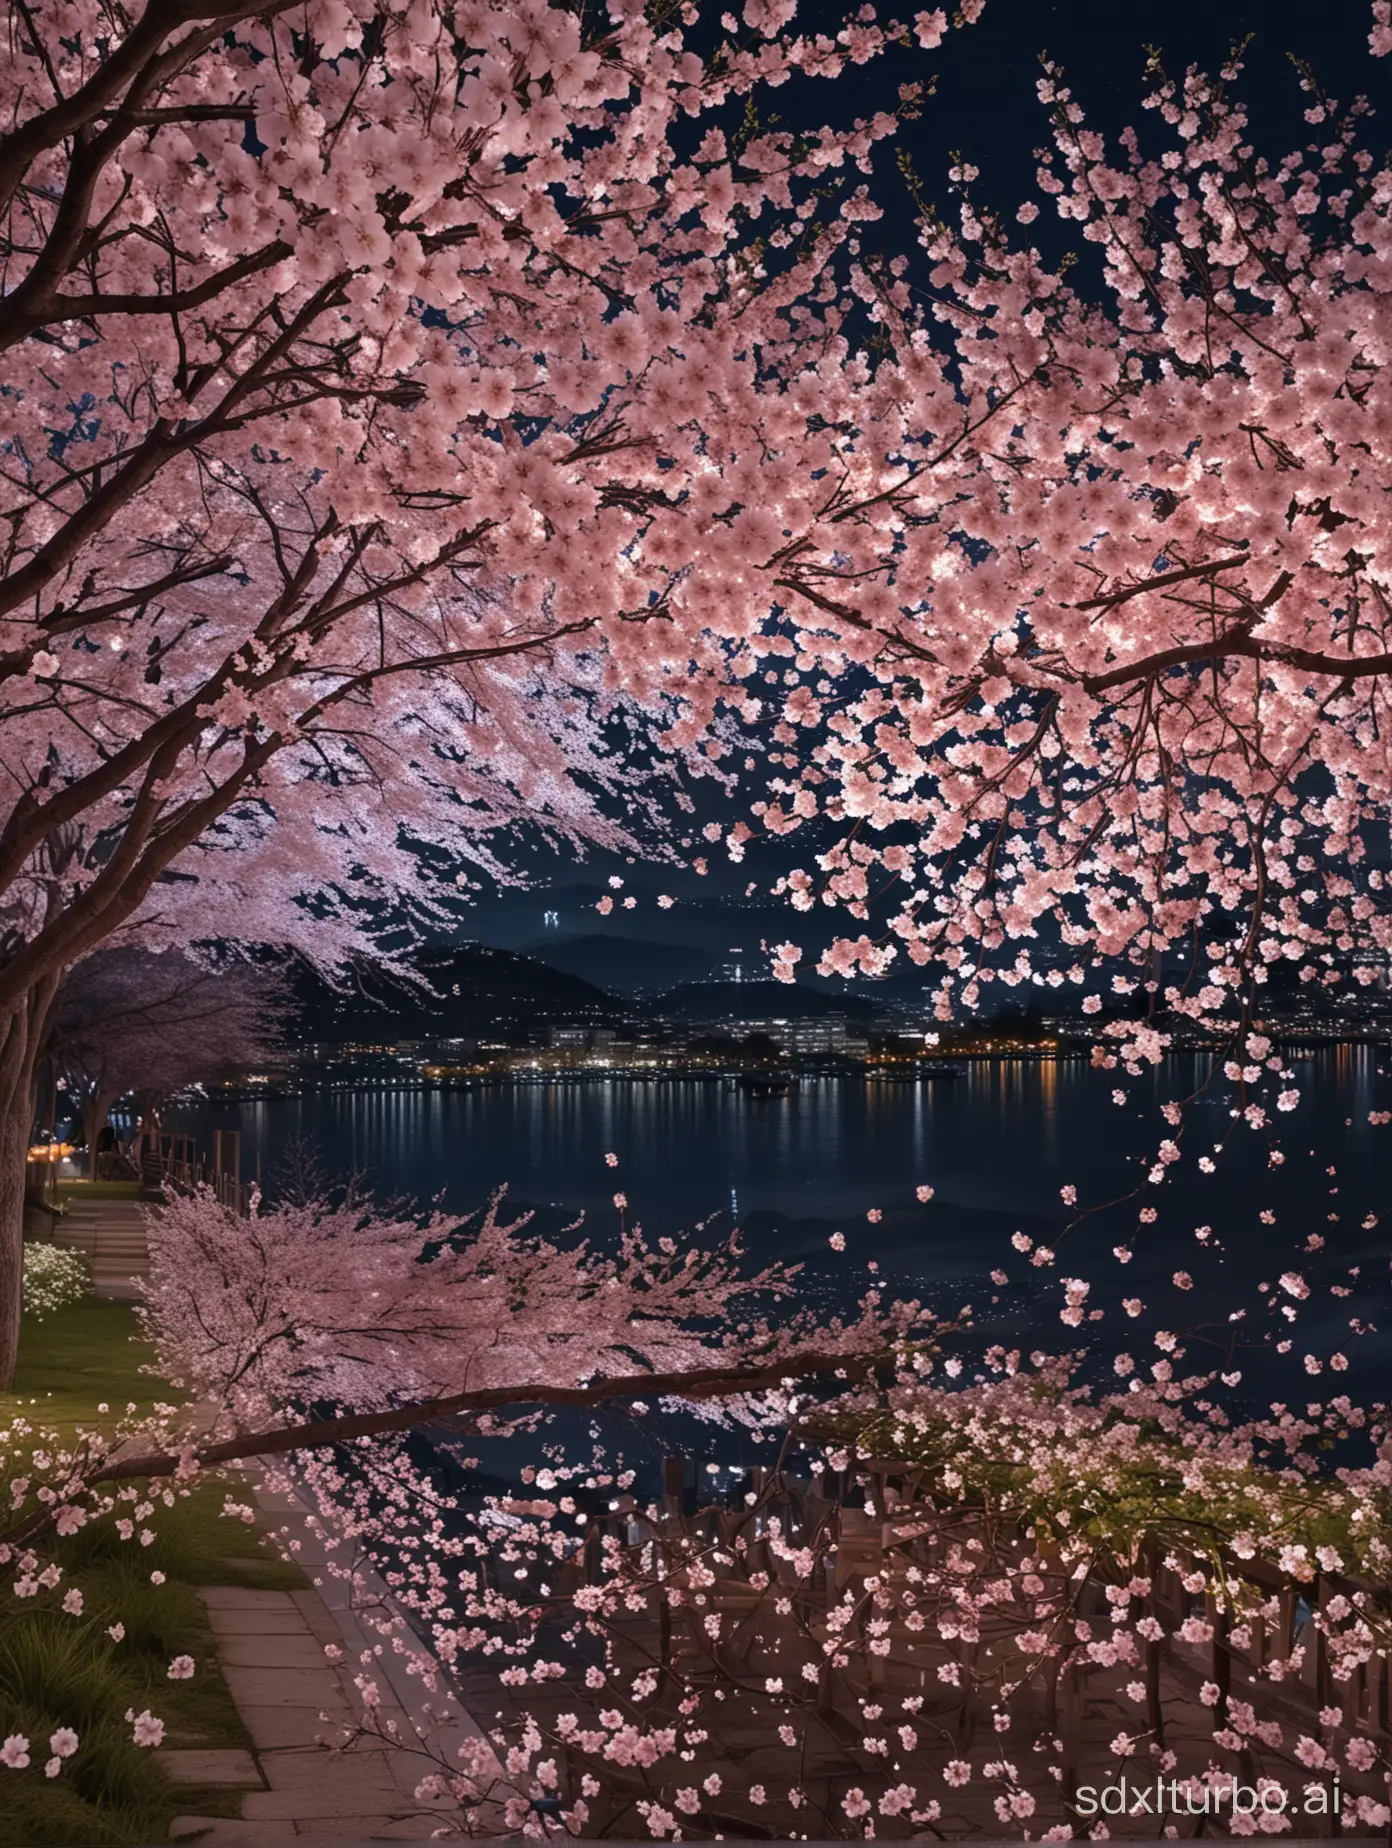 Exquisite-Cherry-Blossom-Night-Scene-in-Stunning-8K-Resolution